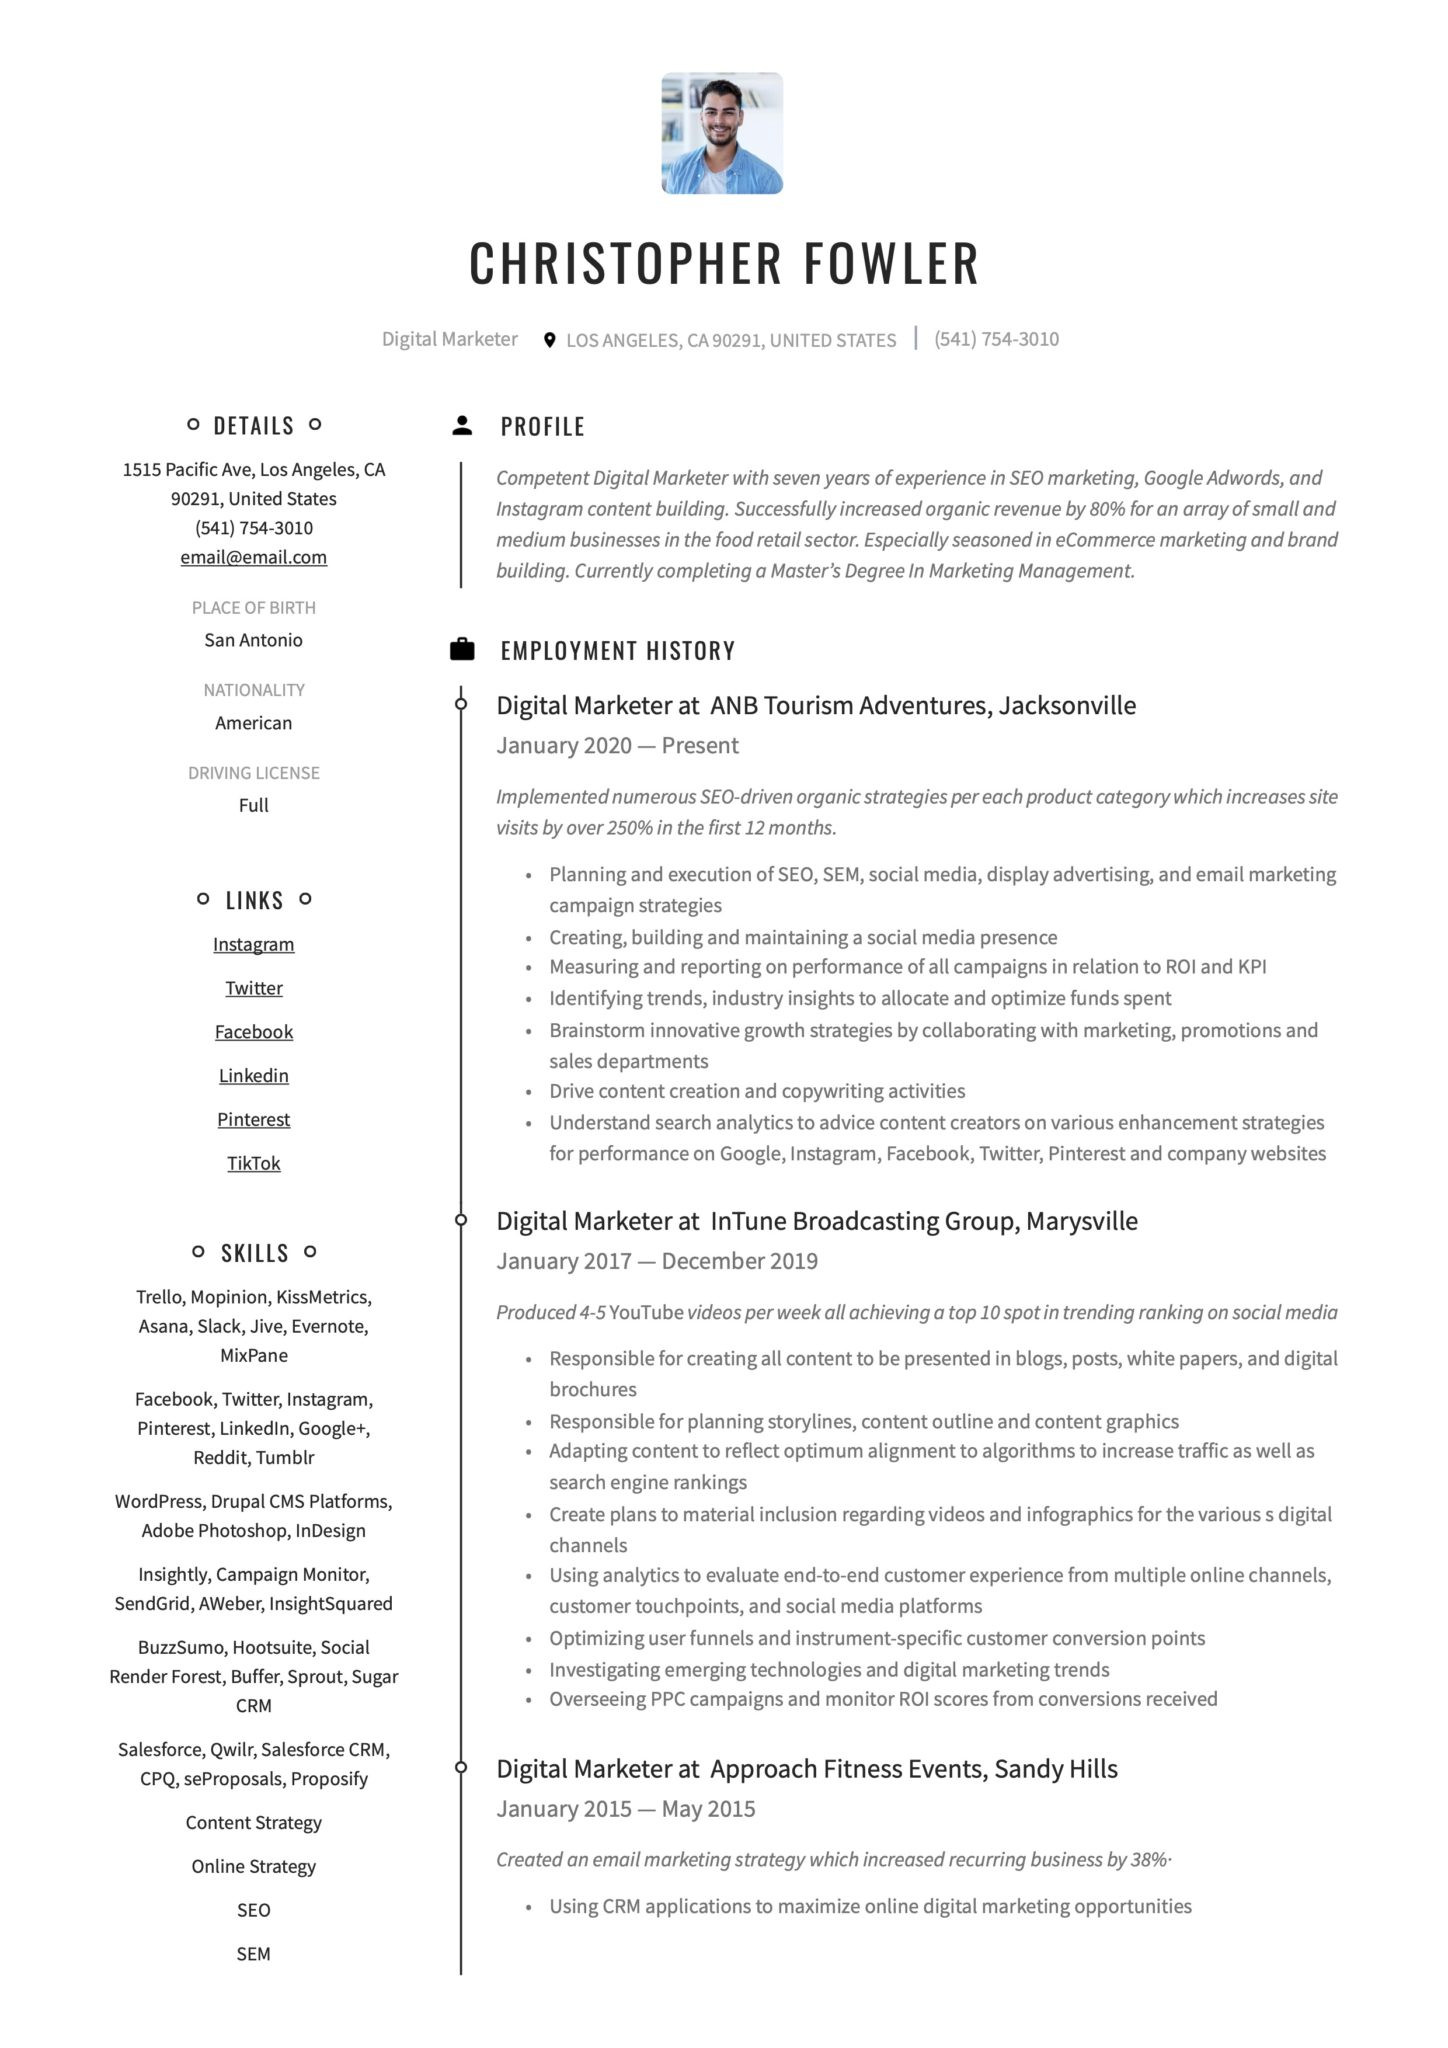 Digital Marketing Resume Sample for Freshers 19 Digital Marketer Resume Examples & Guide 2020 Pdf